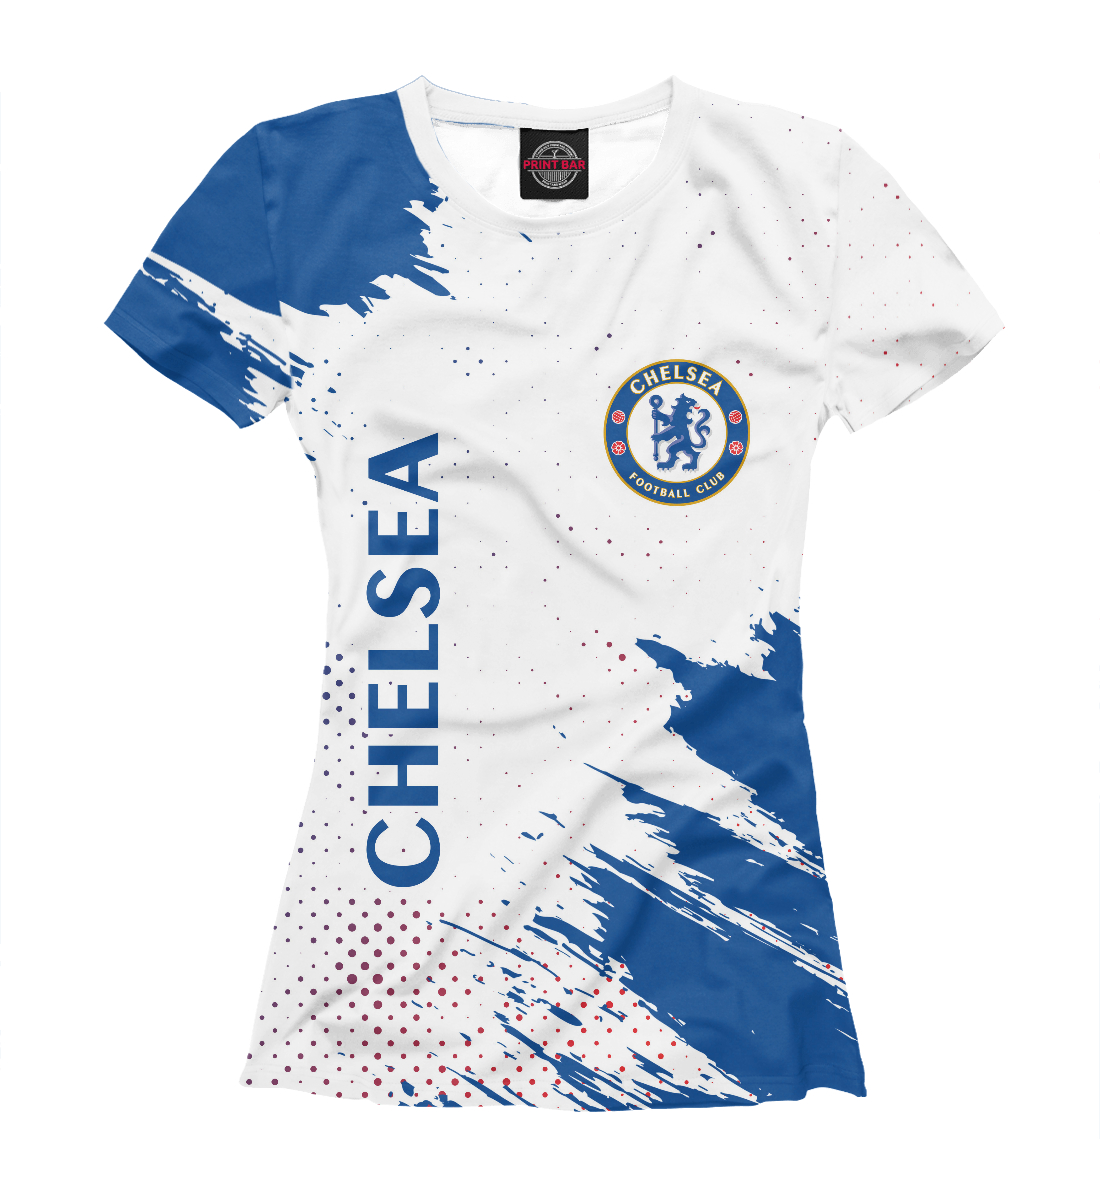 Футболка Chelsea F.C. / Челси для девочек, артикул: CHL-673689-fut-1mp